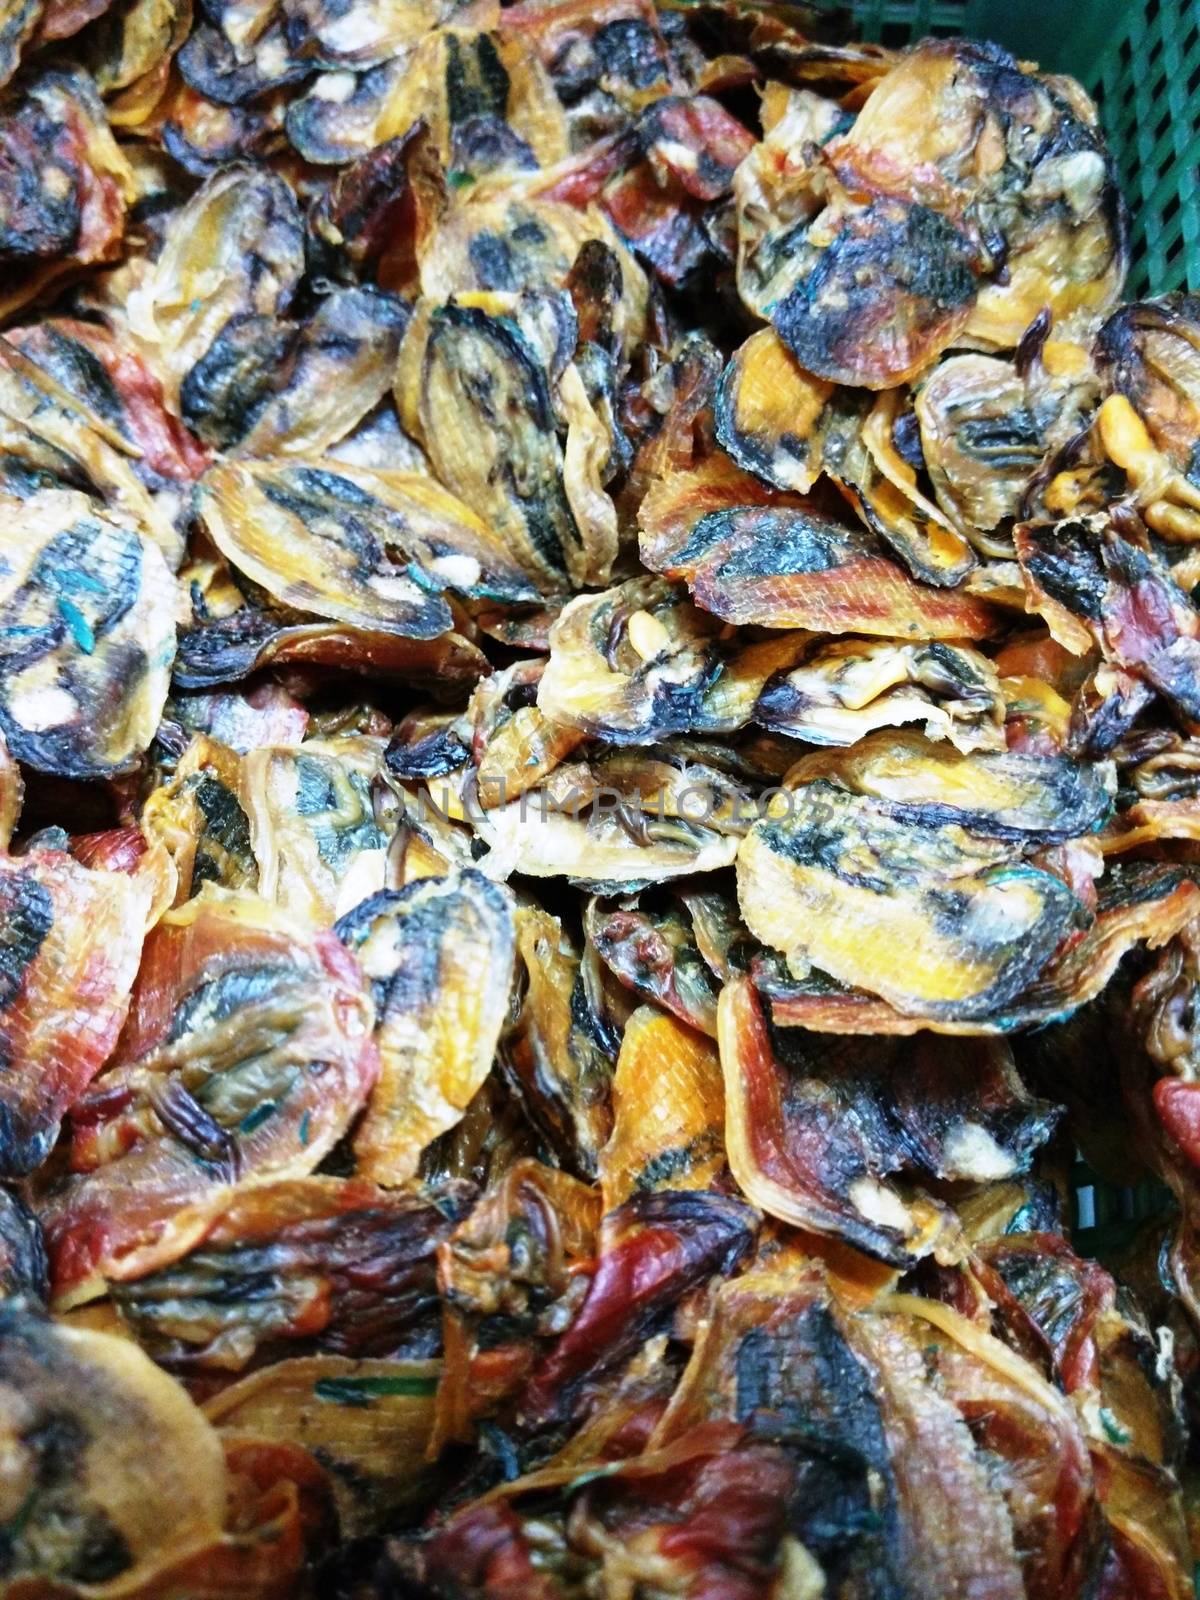 Dried Salted Shellfish by Sevenskyx